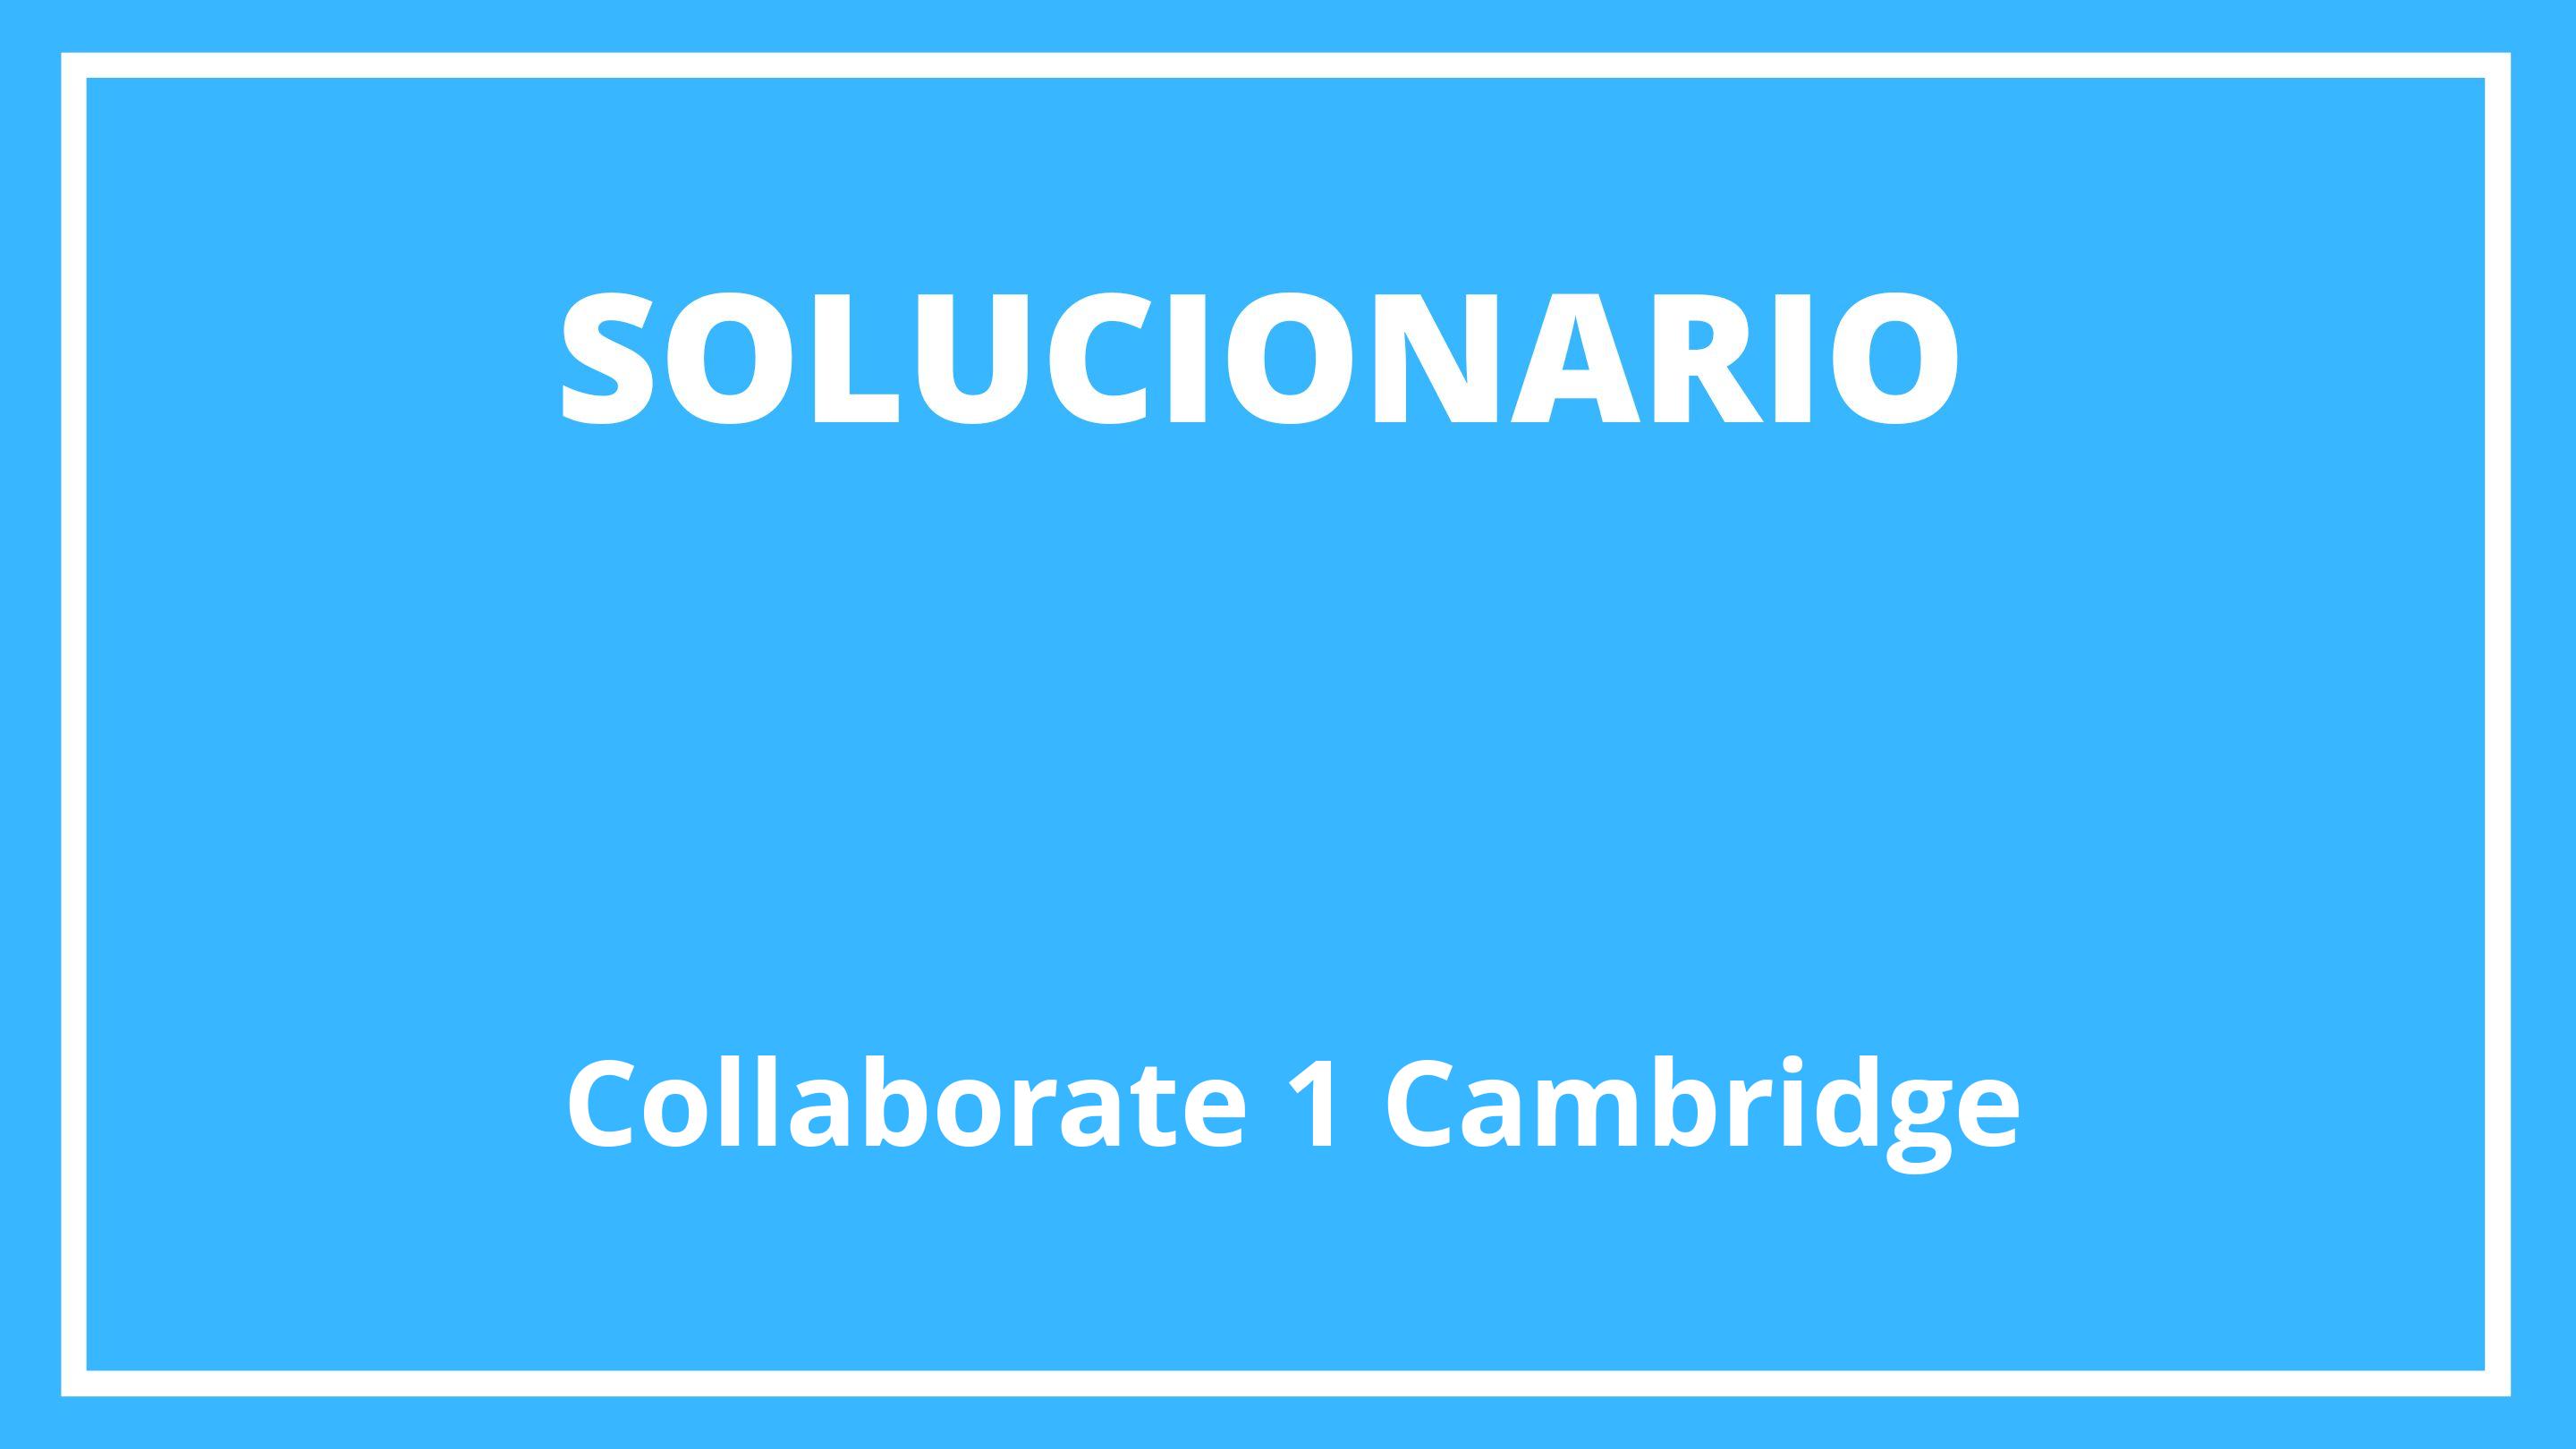 Collaborate 1 Cambridge Solucionario